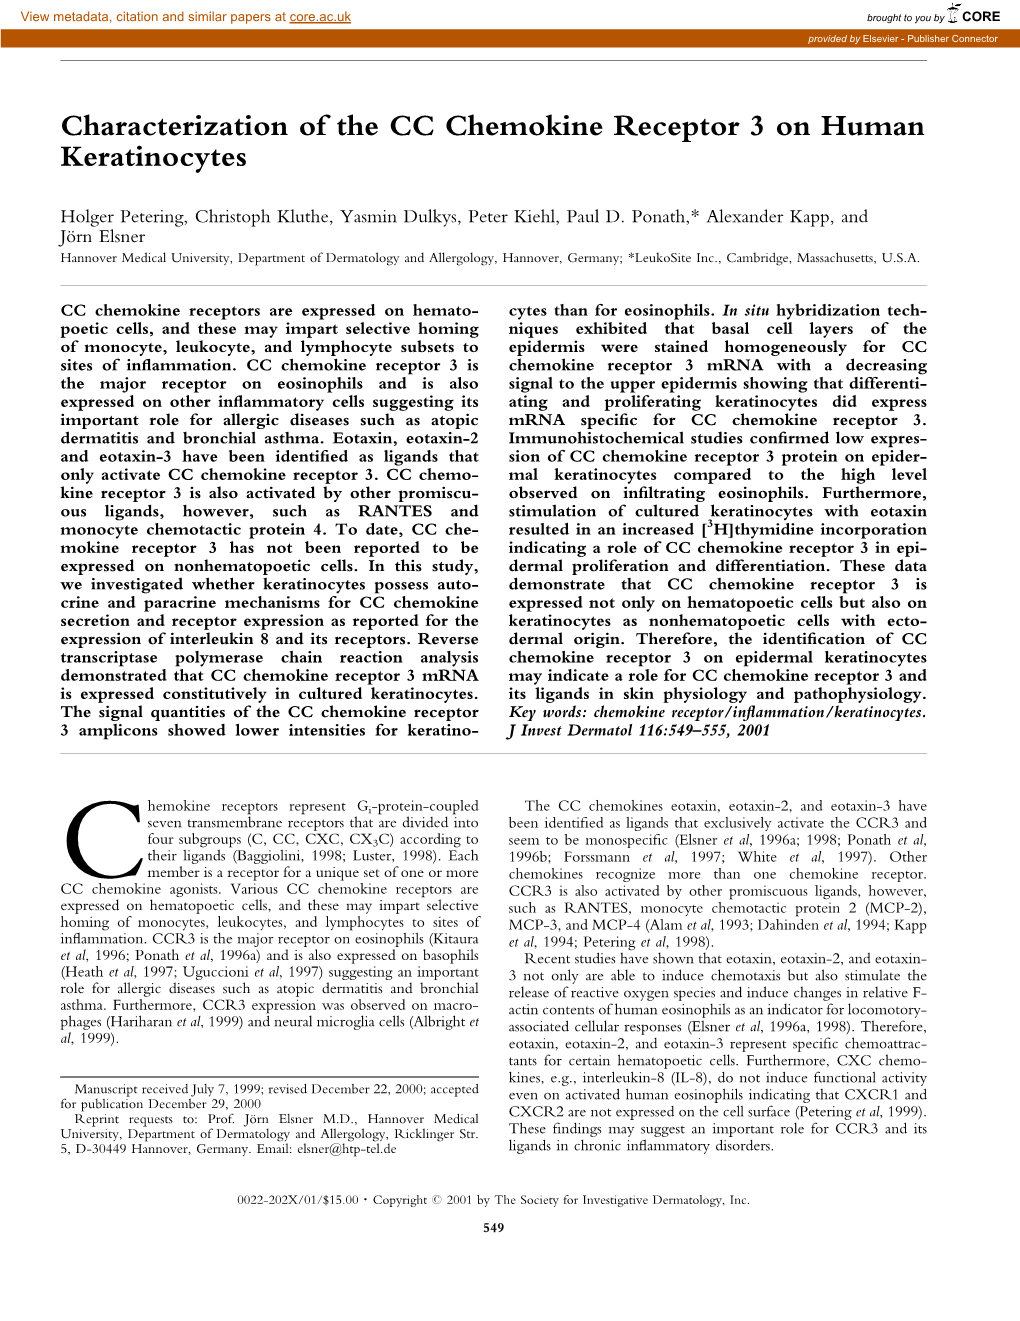 Characterization of the CC Chemokine Receptor 3 on Human Keratinocytes